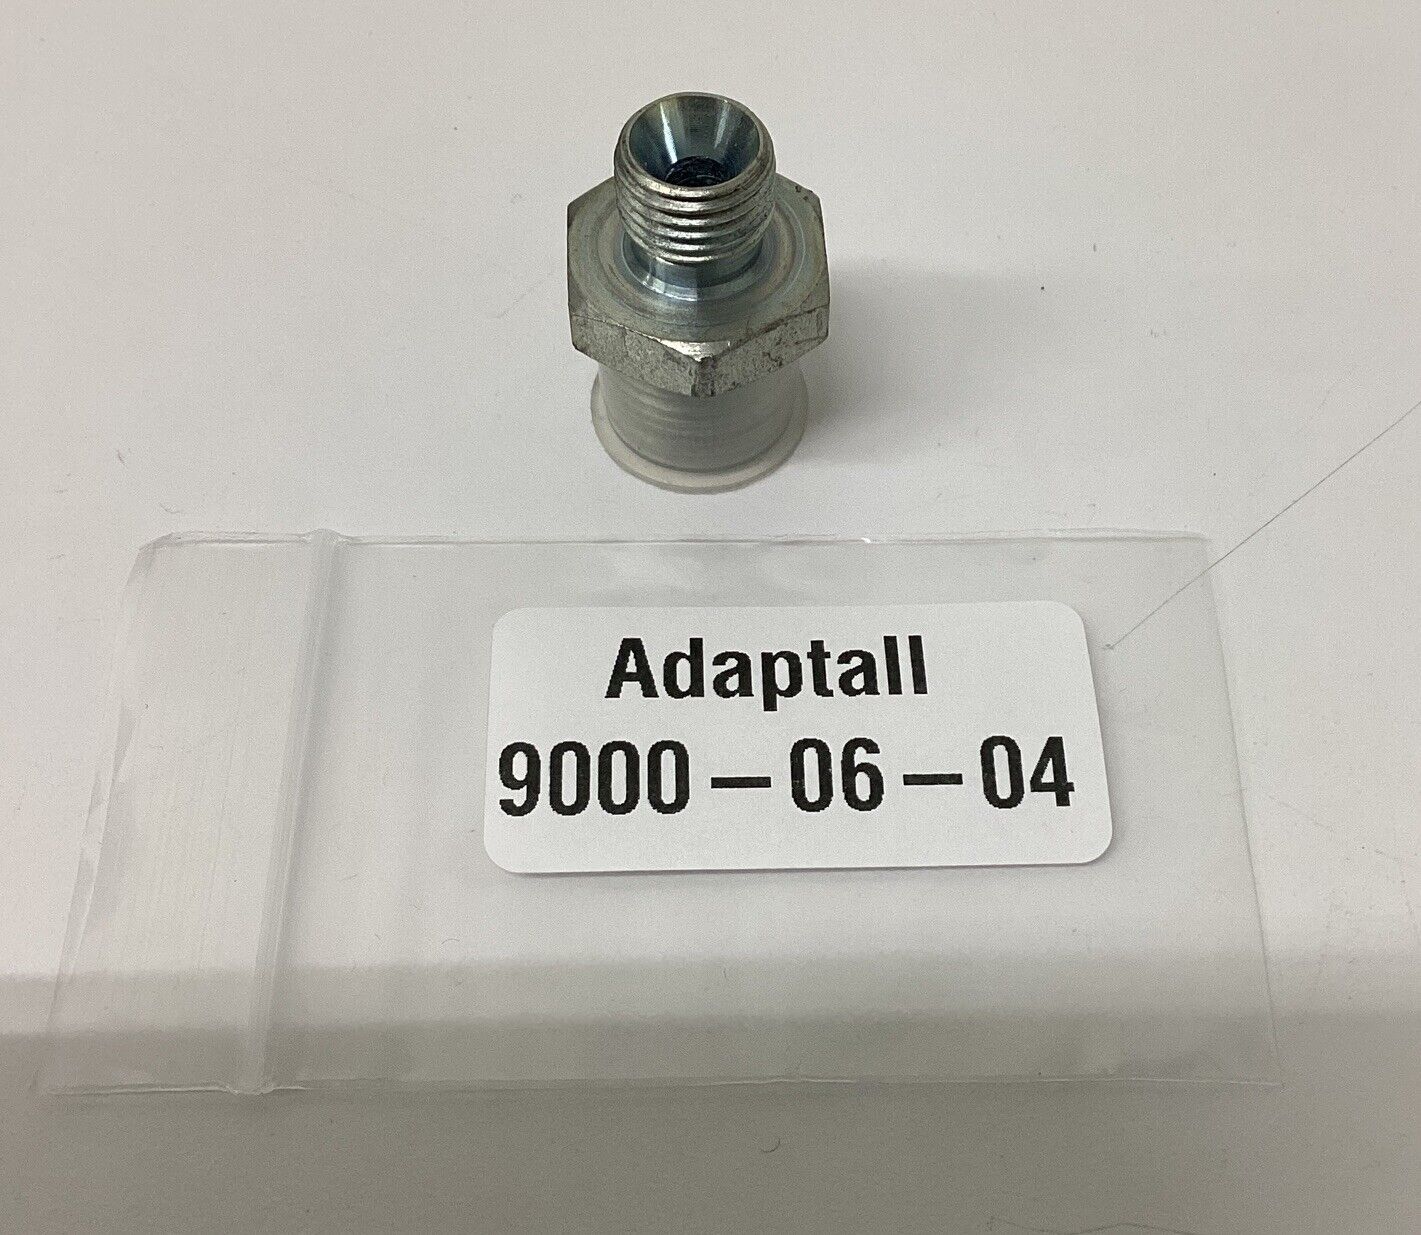 Adaptall 9000-06-04 BSPP Nipple G3/8-19 x G1/4-19 Fitting (CL112)